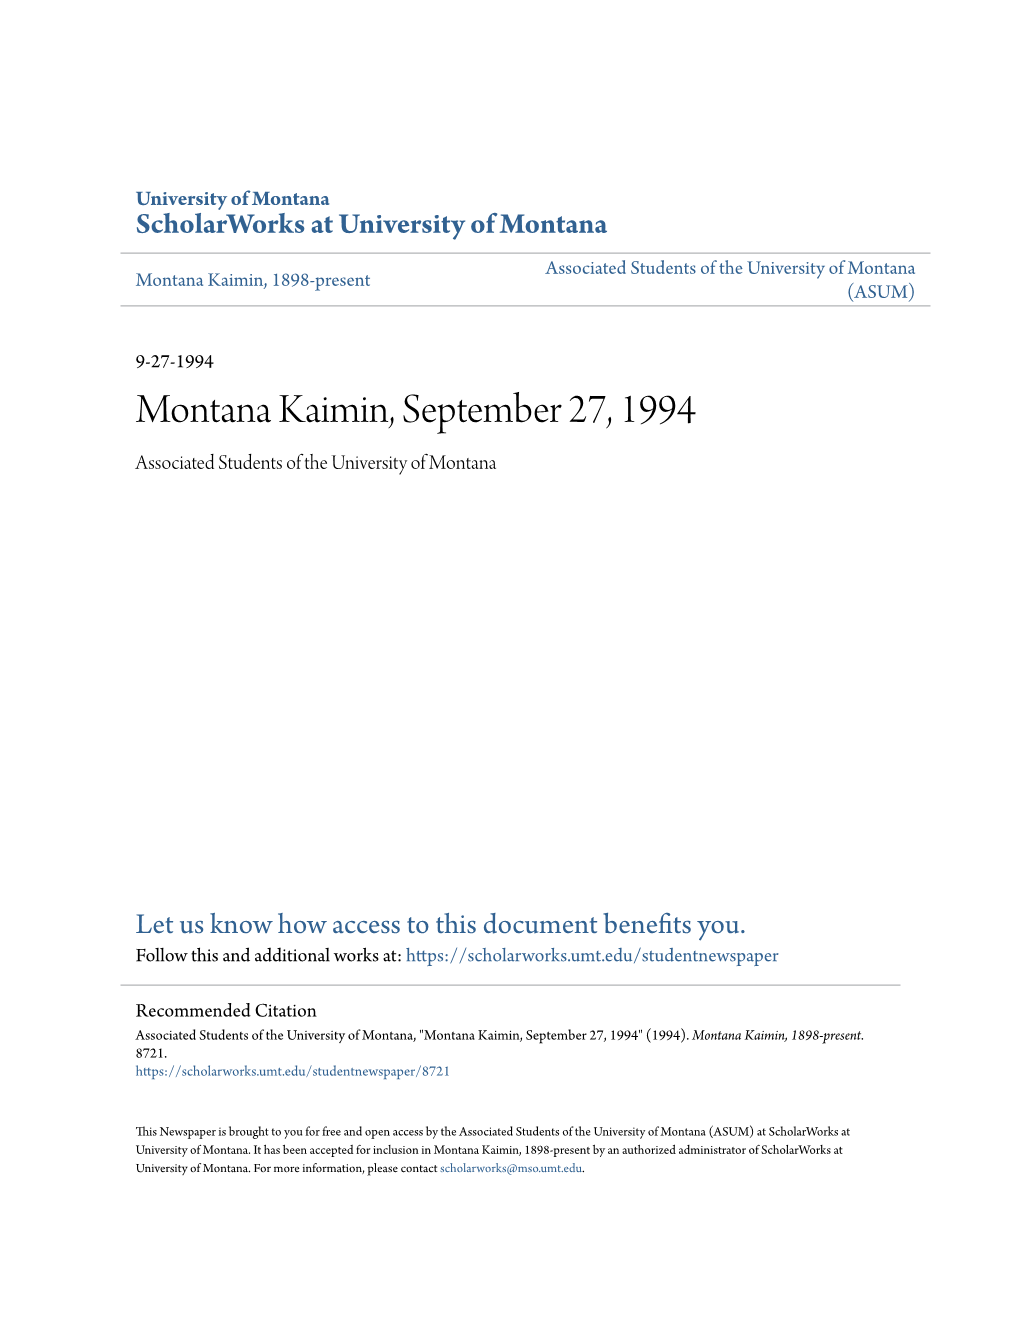 Montana Kaimin, September 27, 1994 Associated Students of the University of Montana